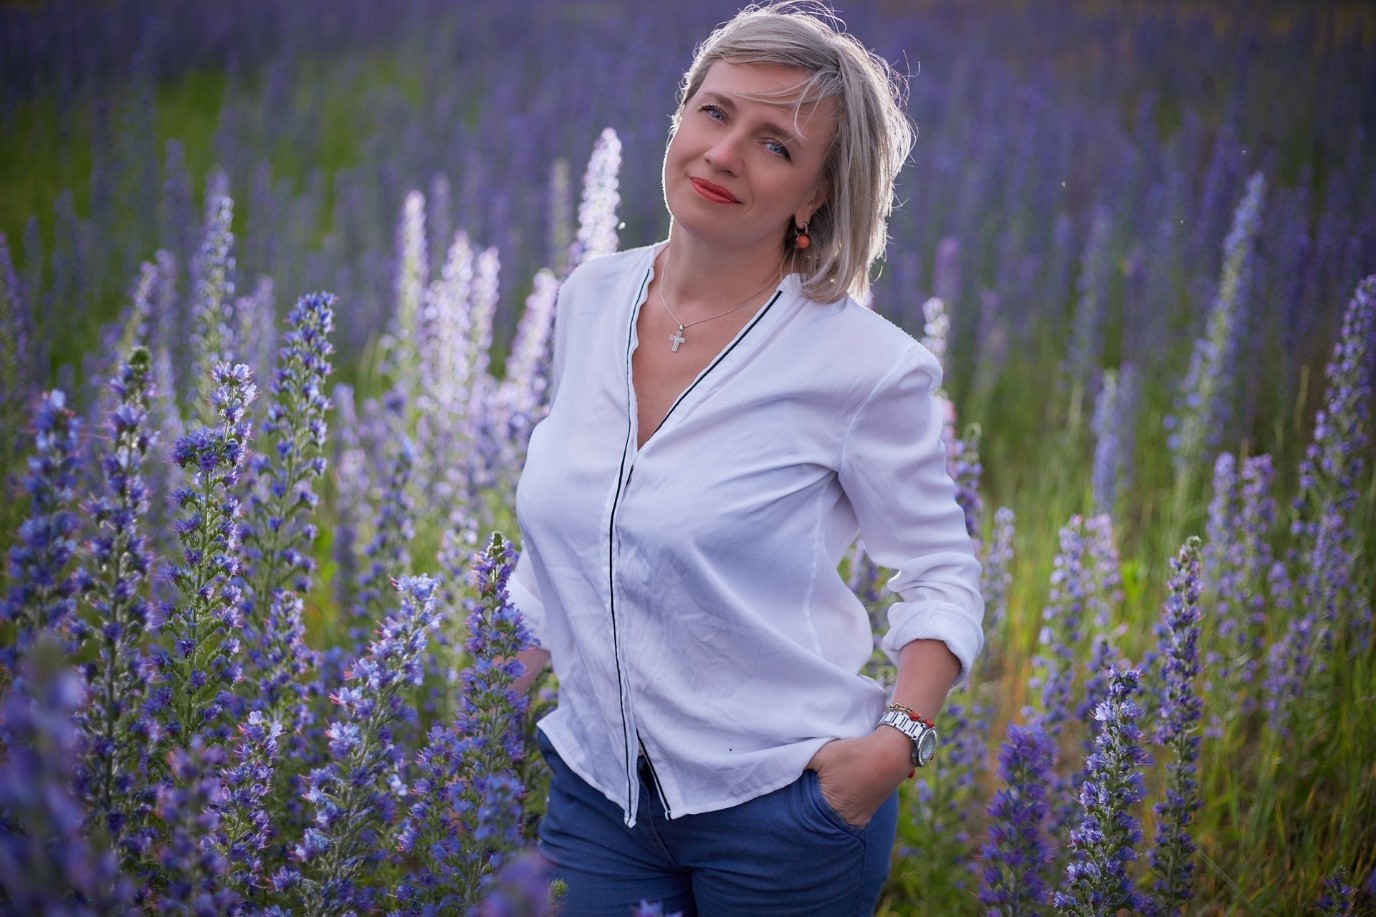 Frauenmode 202122 junge Frau hellblaue Bluse mit Volants im Lavendelfeld